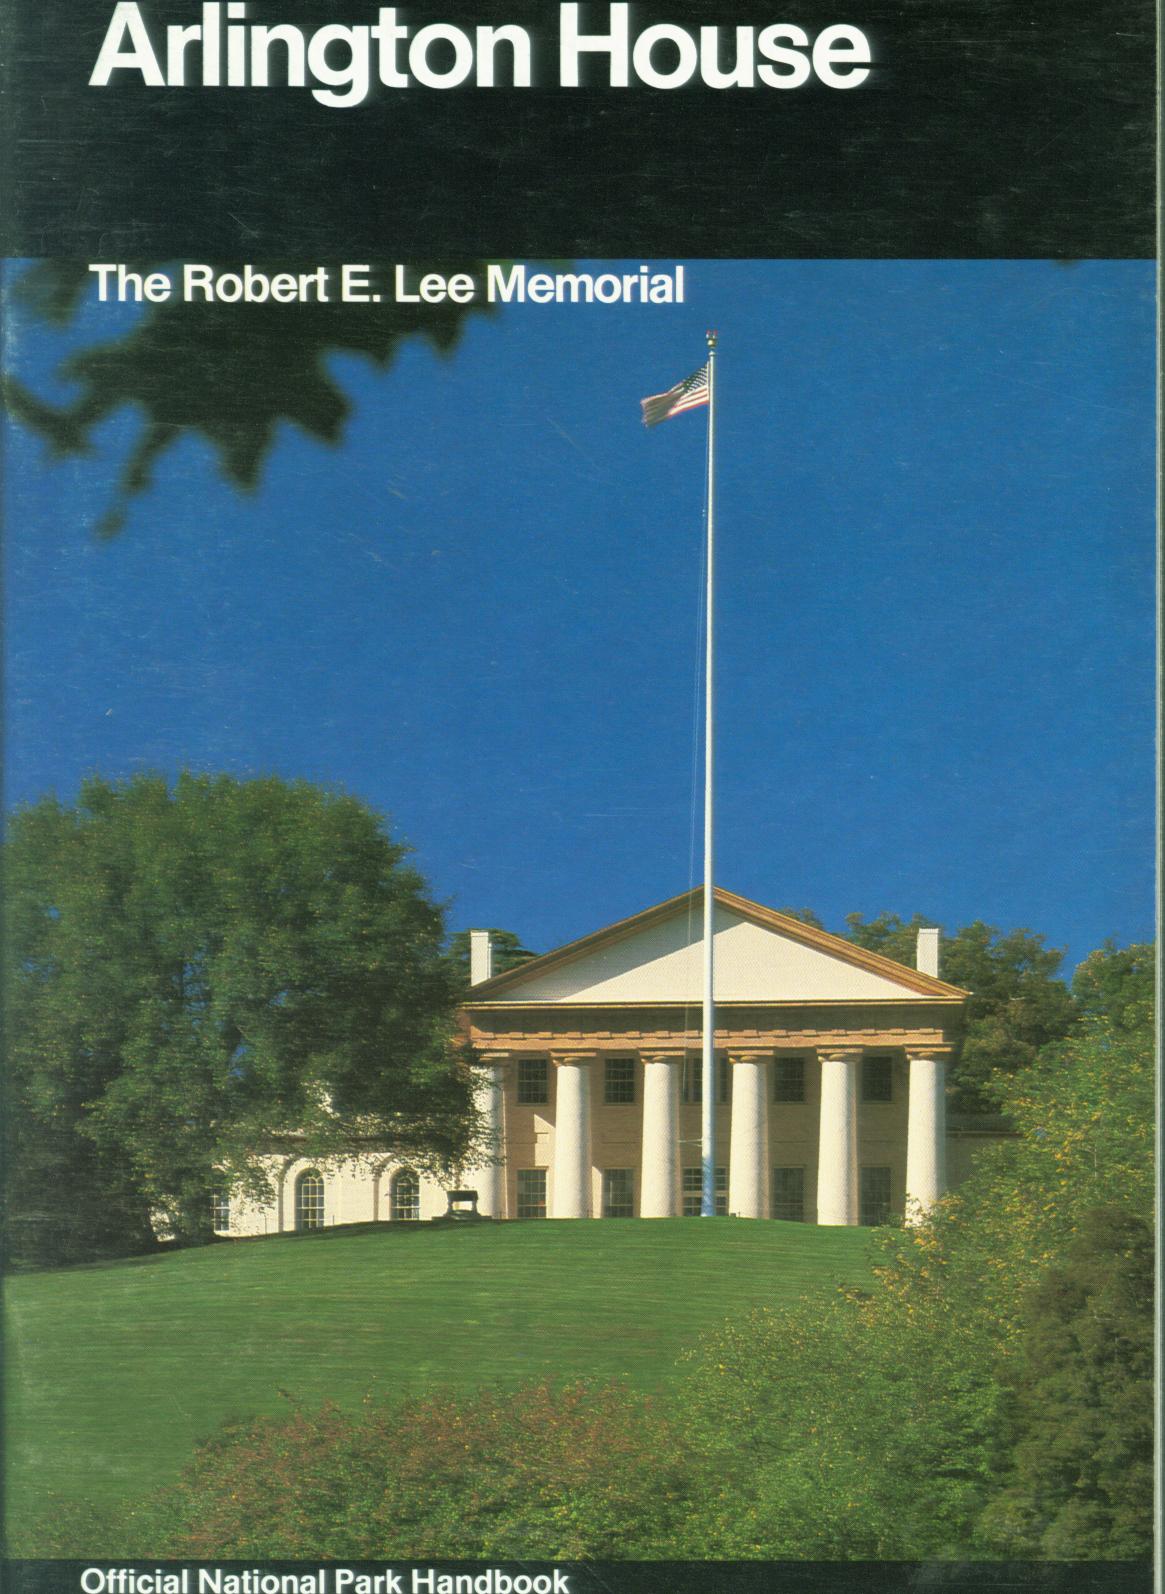 ARLINGTON HOUSE: the Robert E. Lee Memorial (VA).